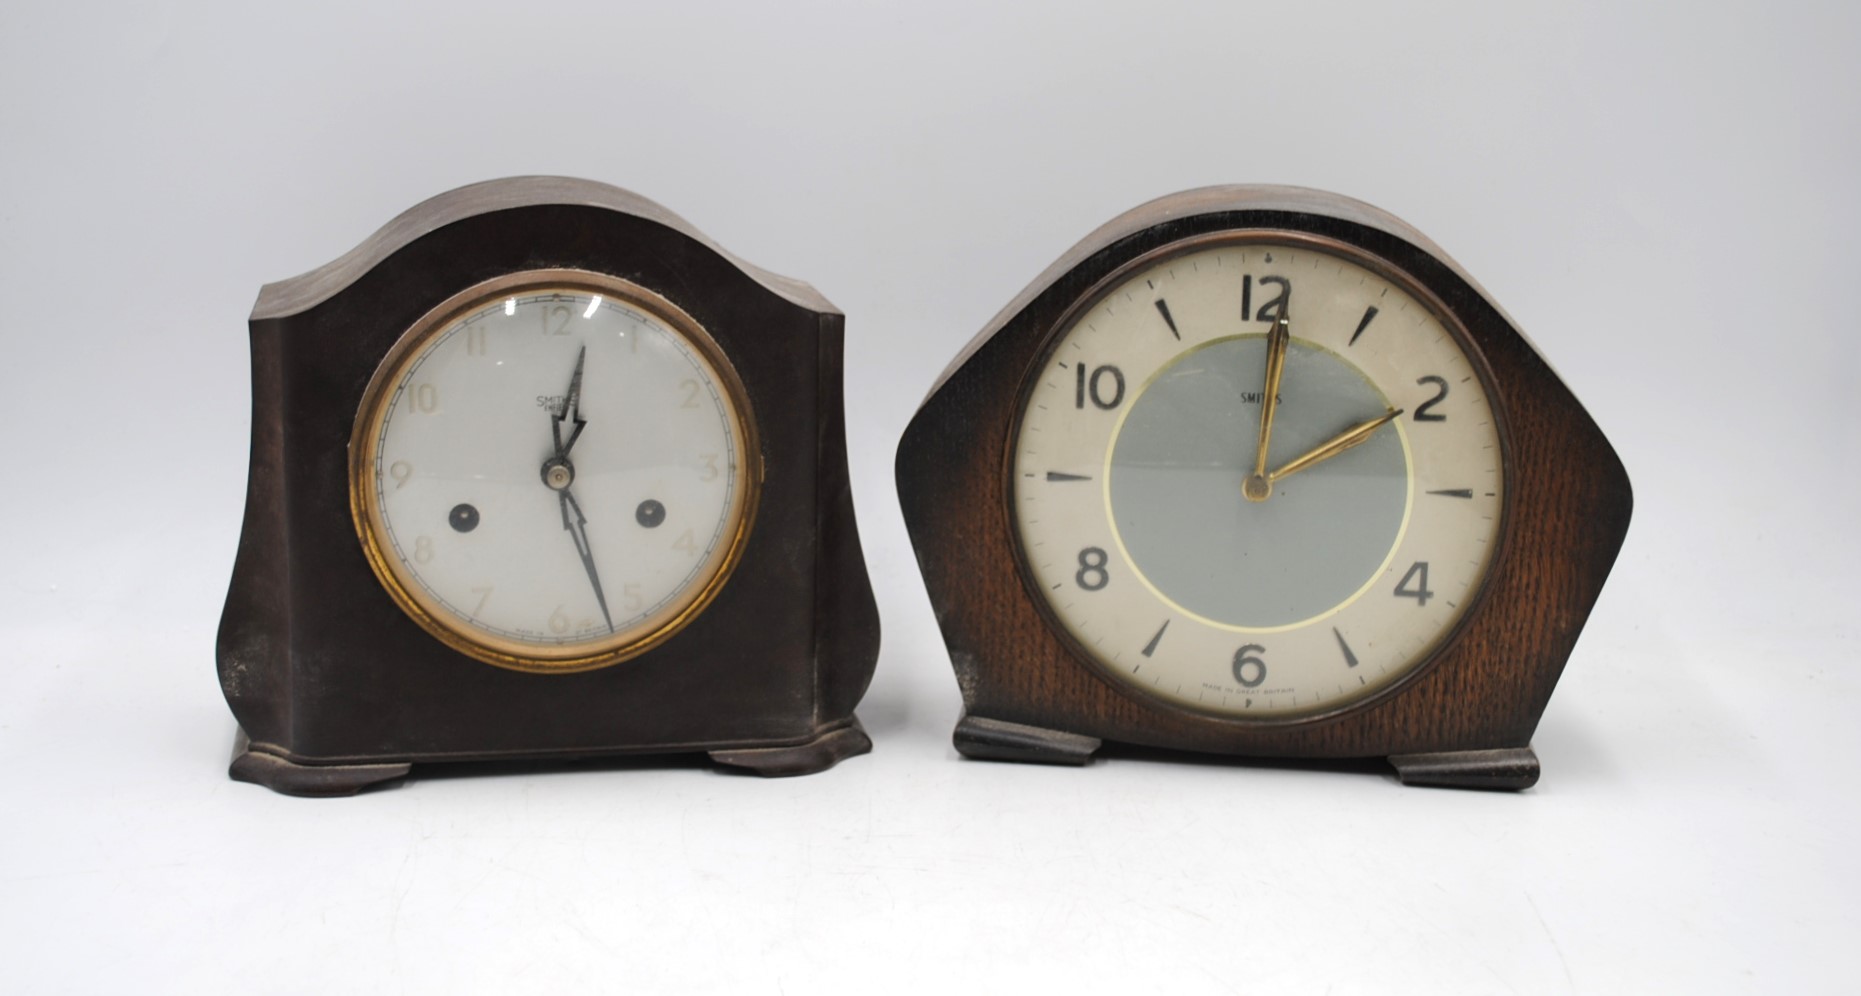 A vintage Smiths bakelite mantel clock along with a Smiths oak mantel clock